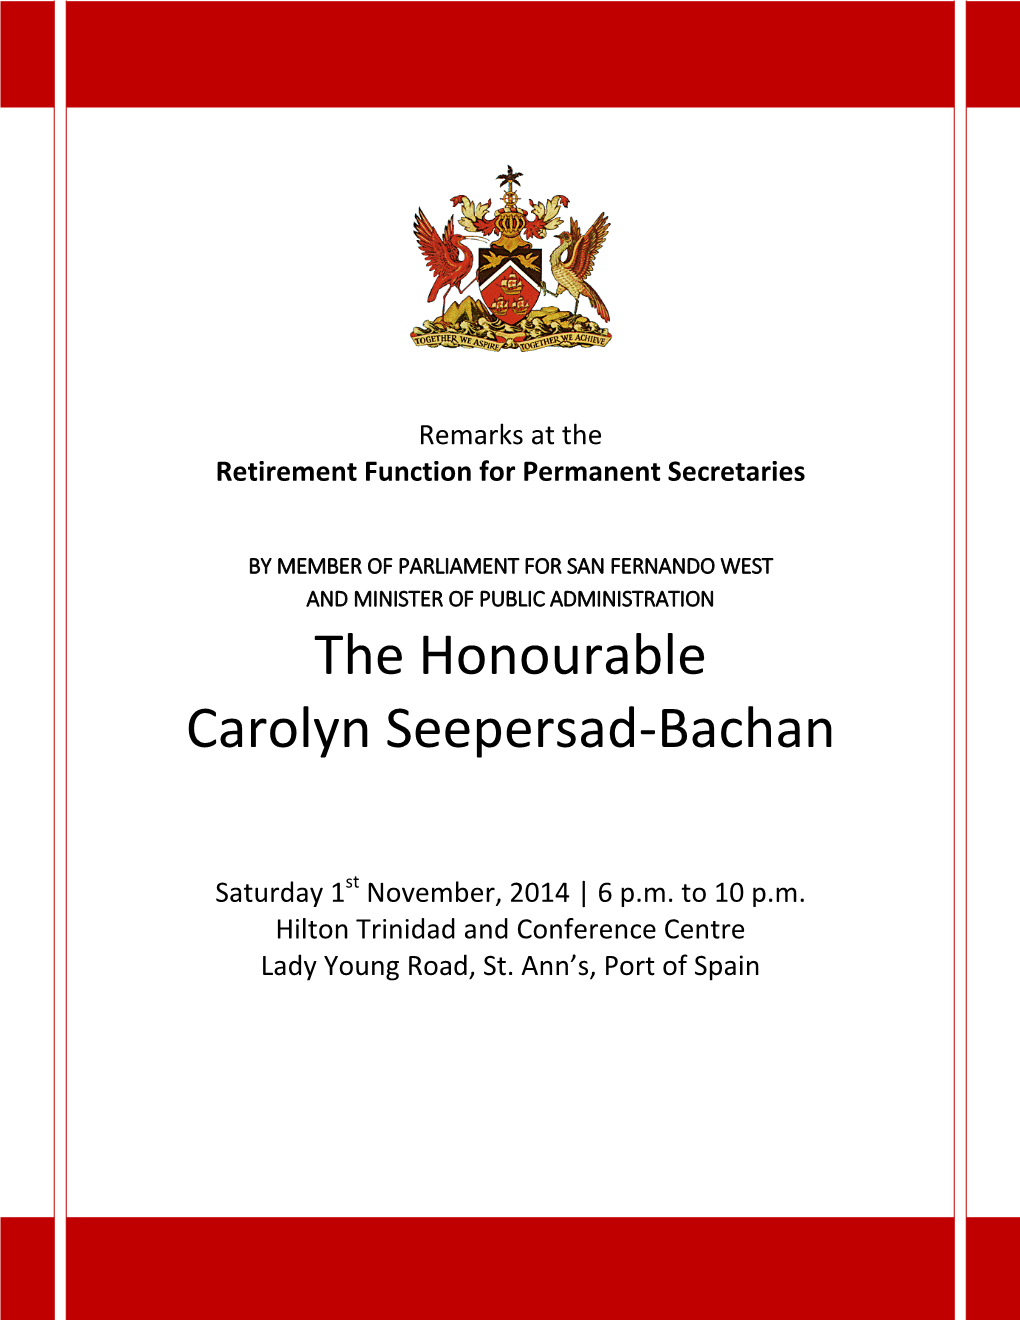 The Honourable Carolyn Seepersad-Bachan